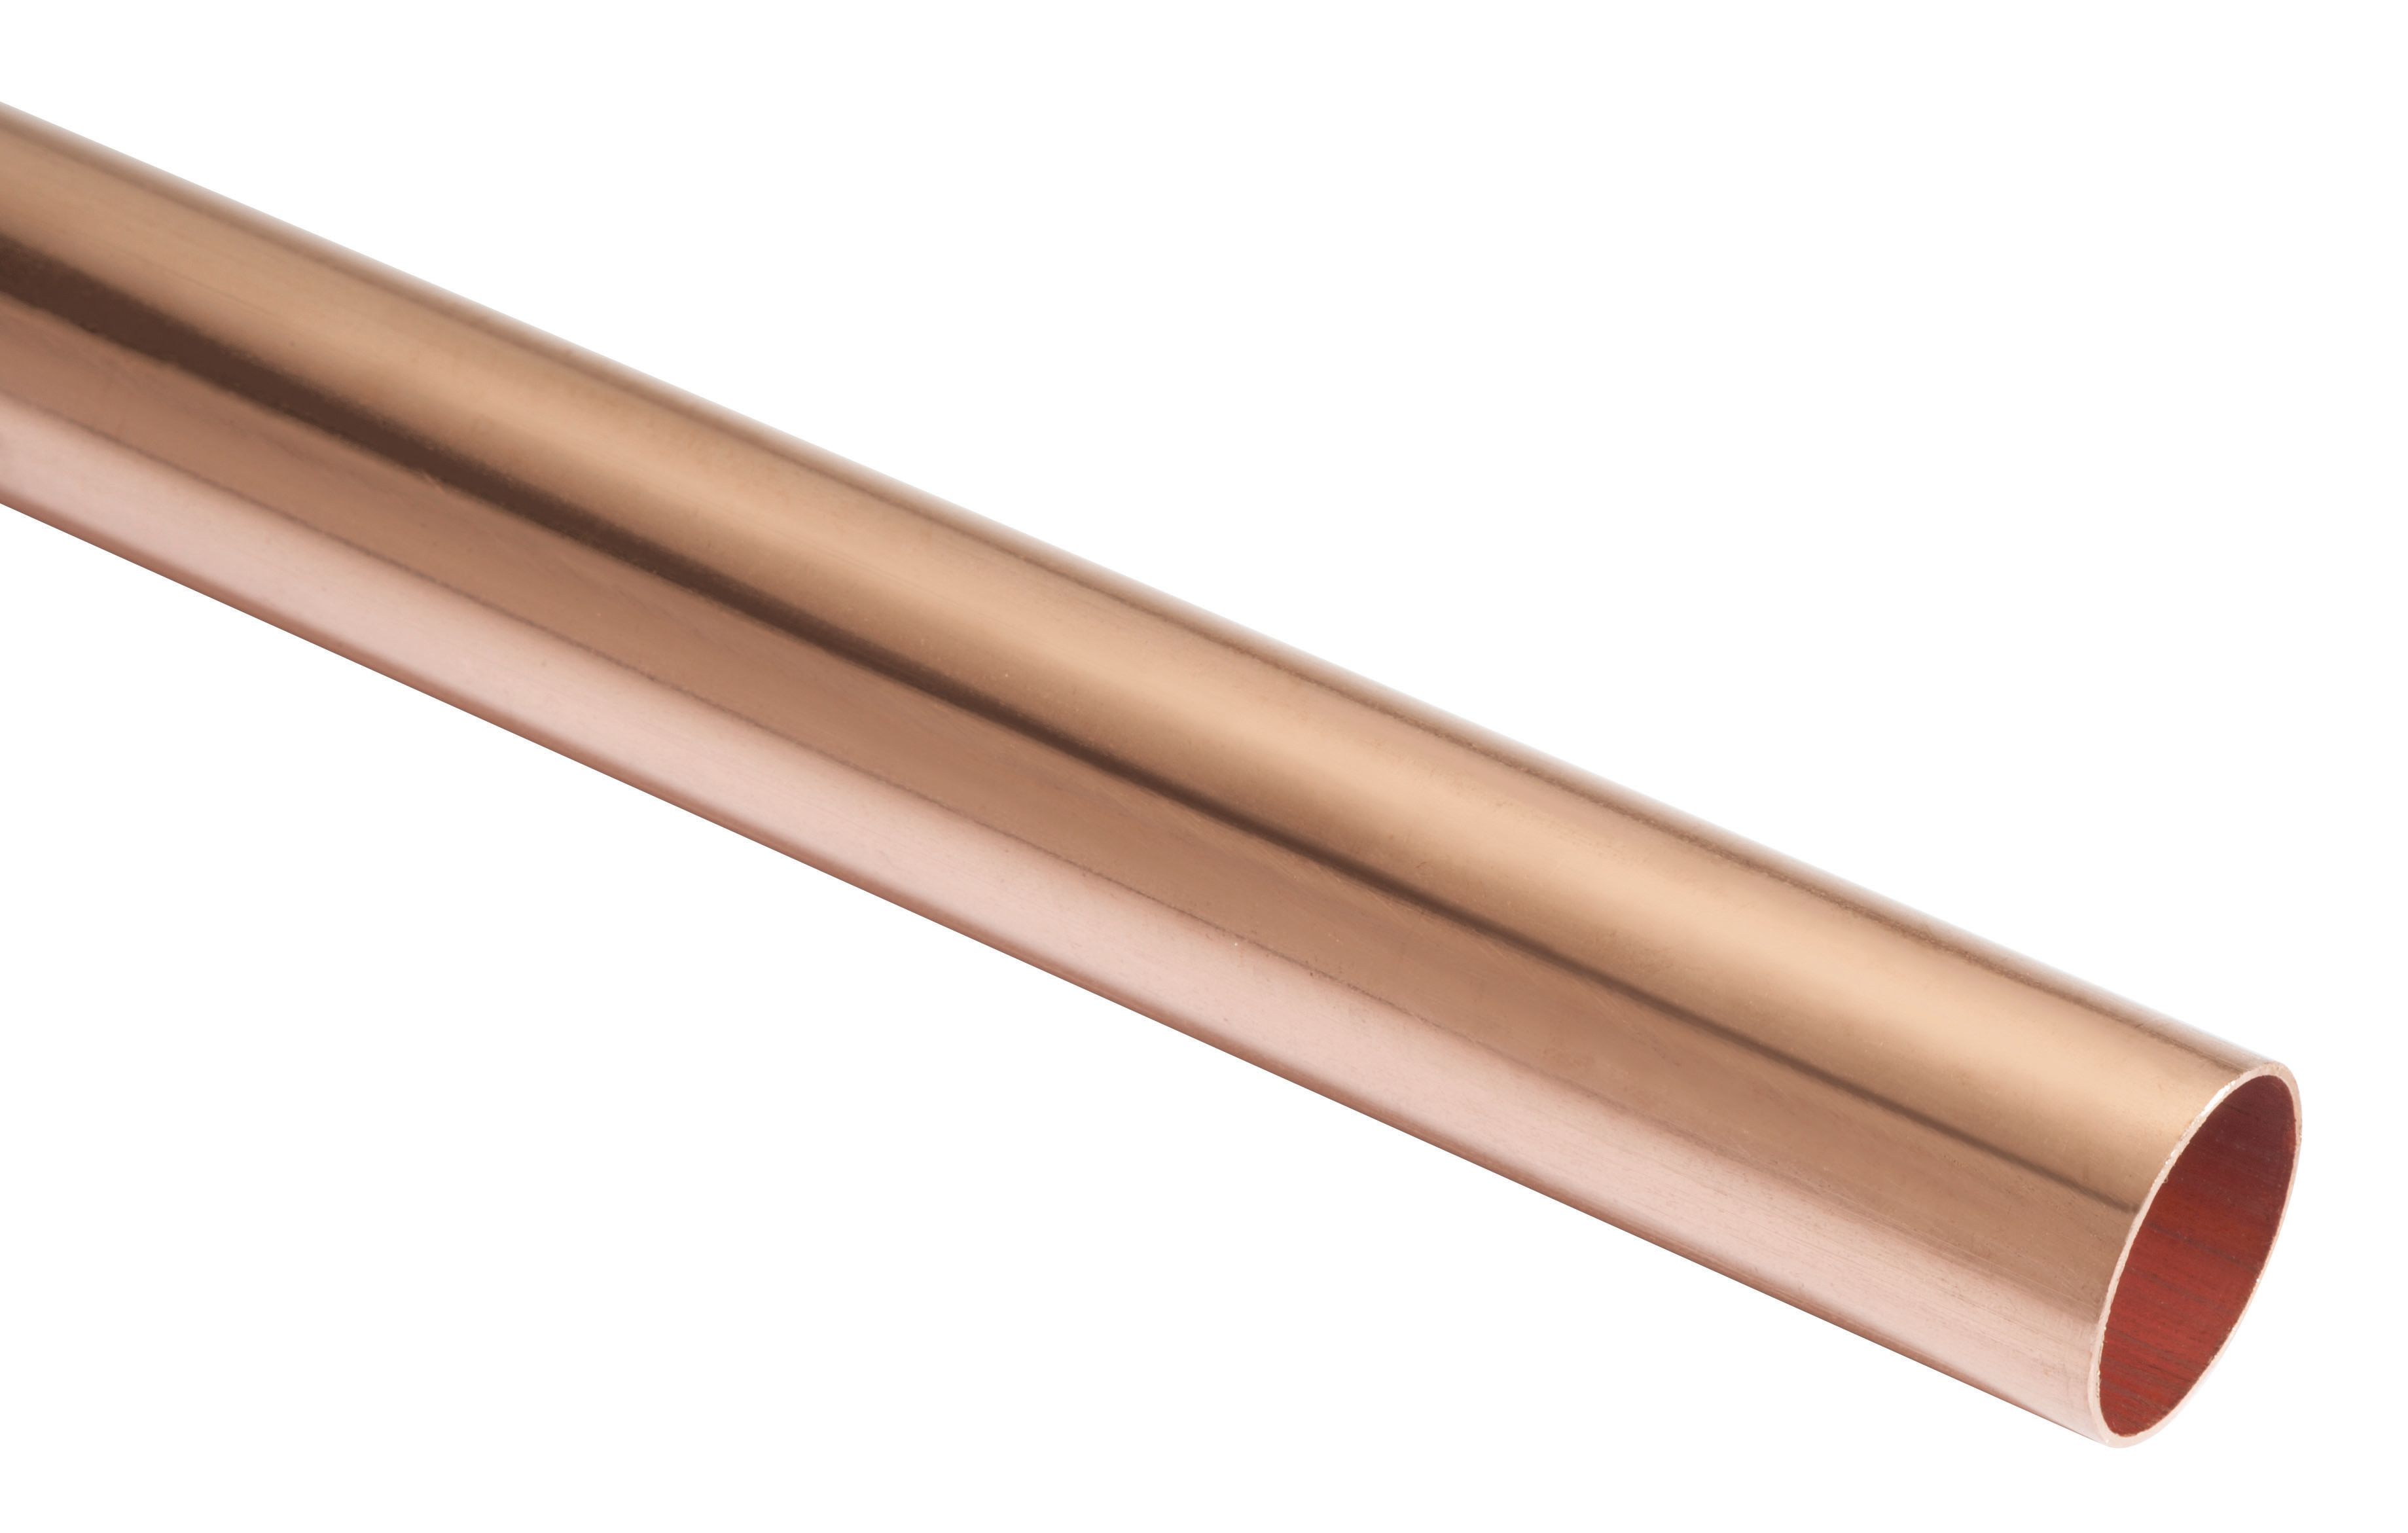 Wednesbury Copper Pipe - 22mm x 3m